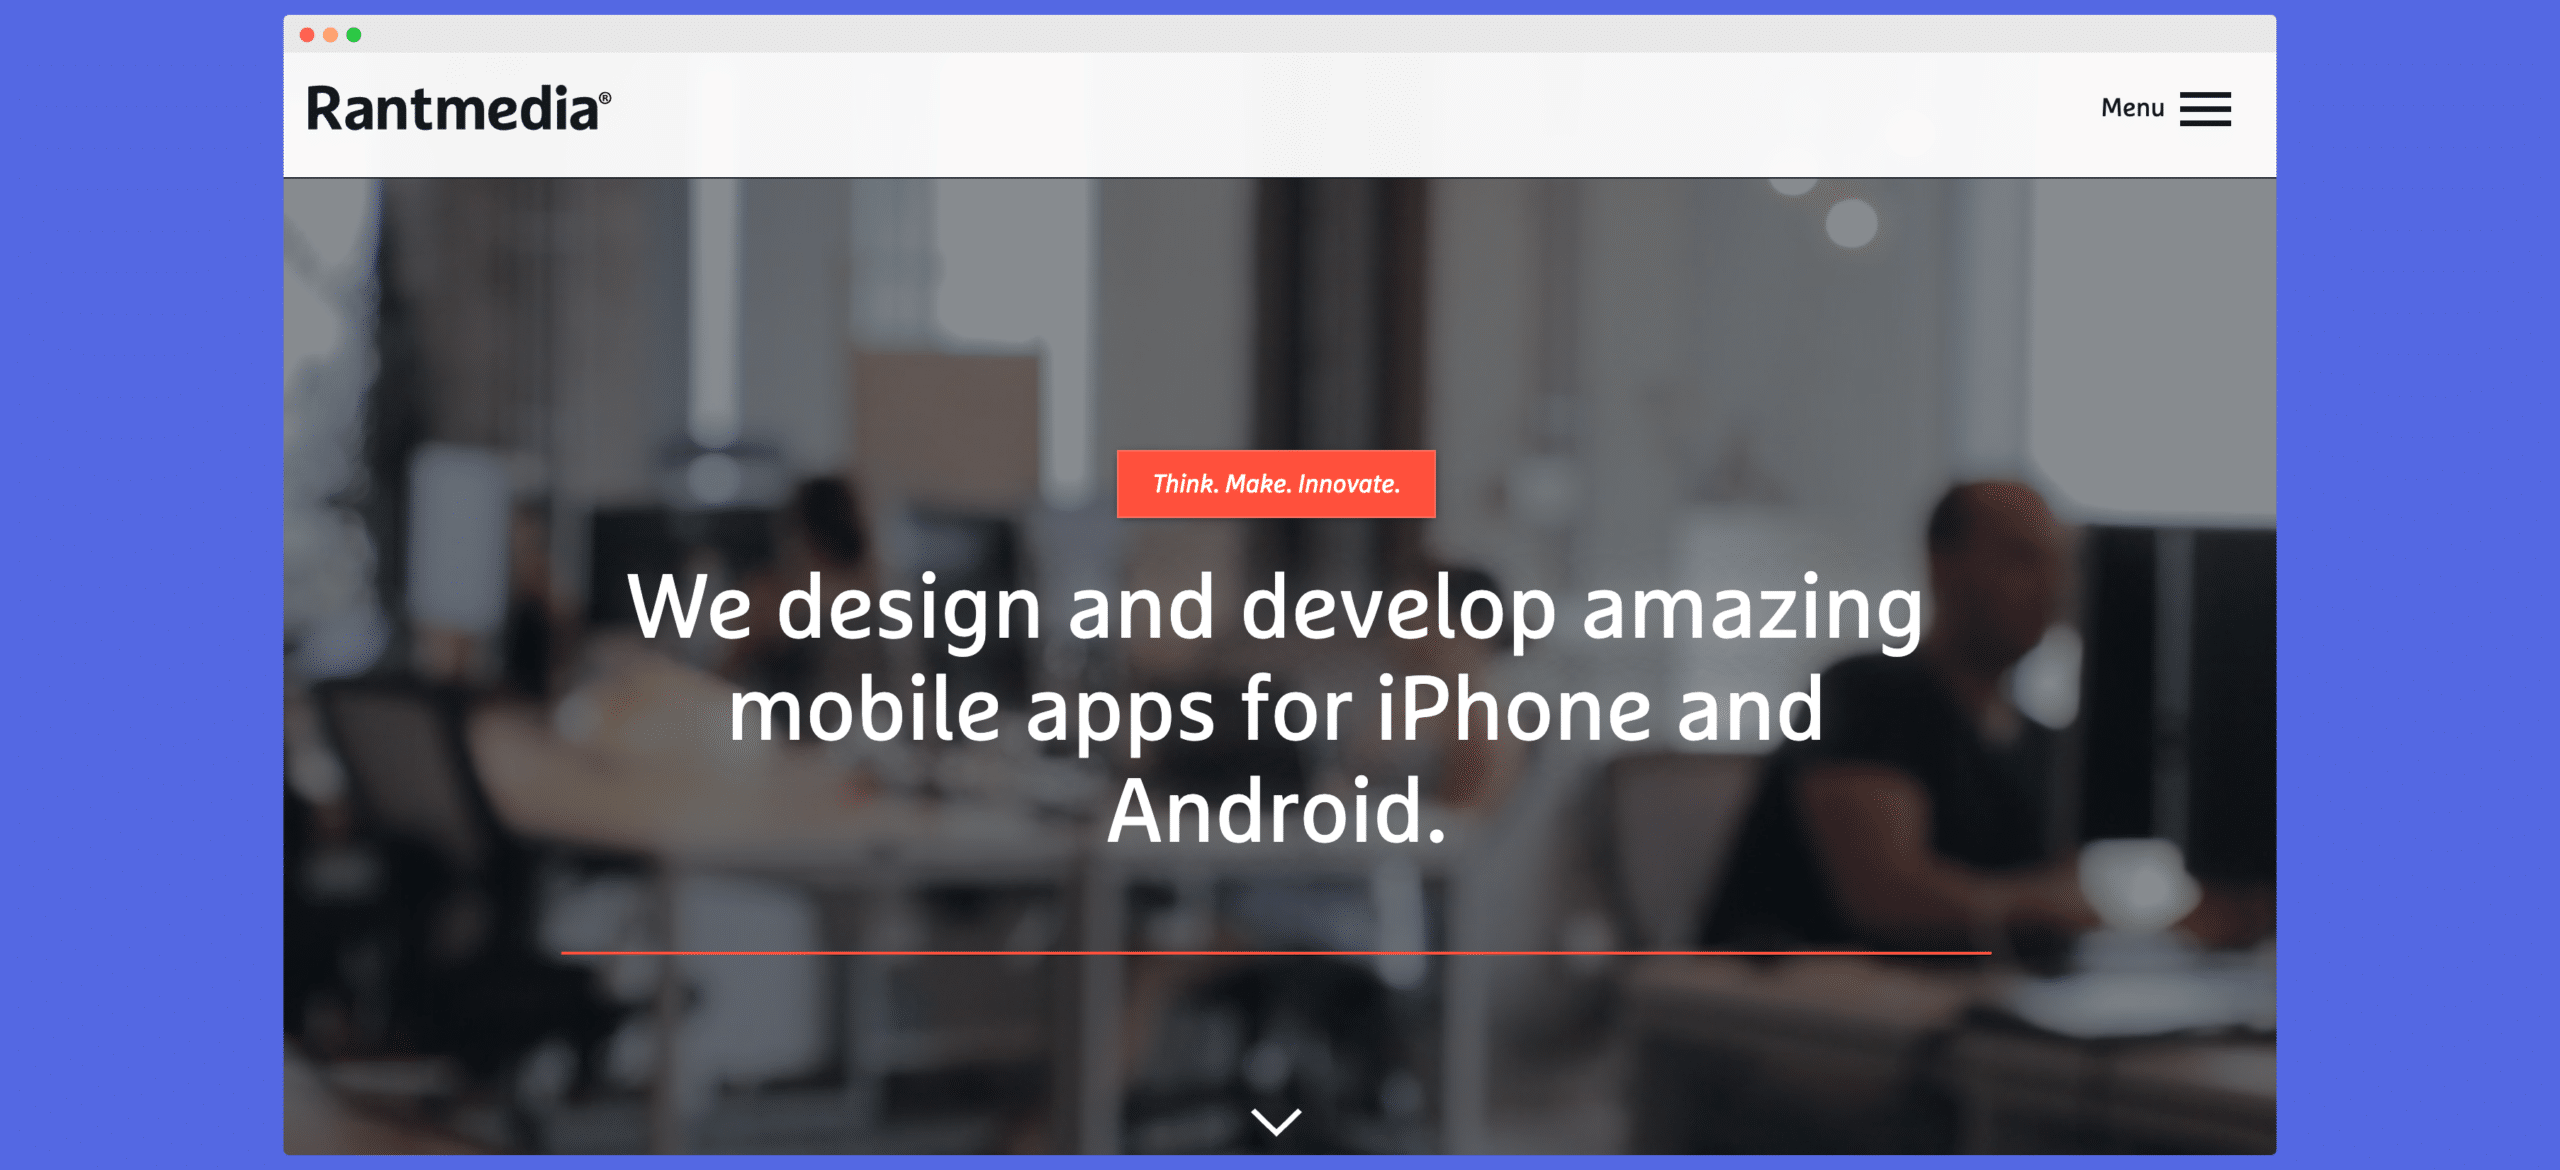 rantmedia - award winning mobile app development company website